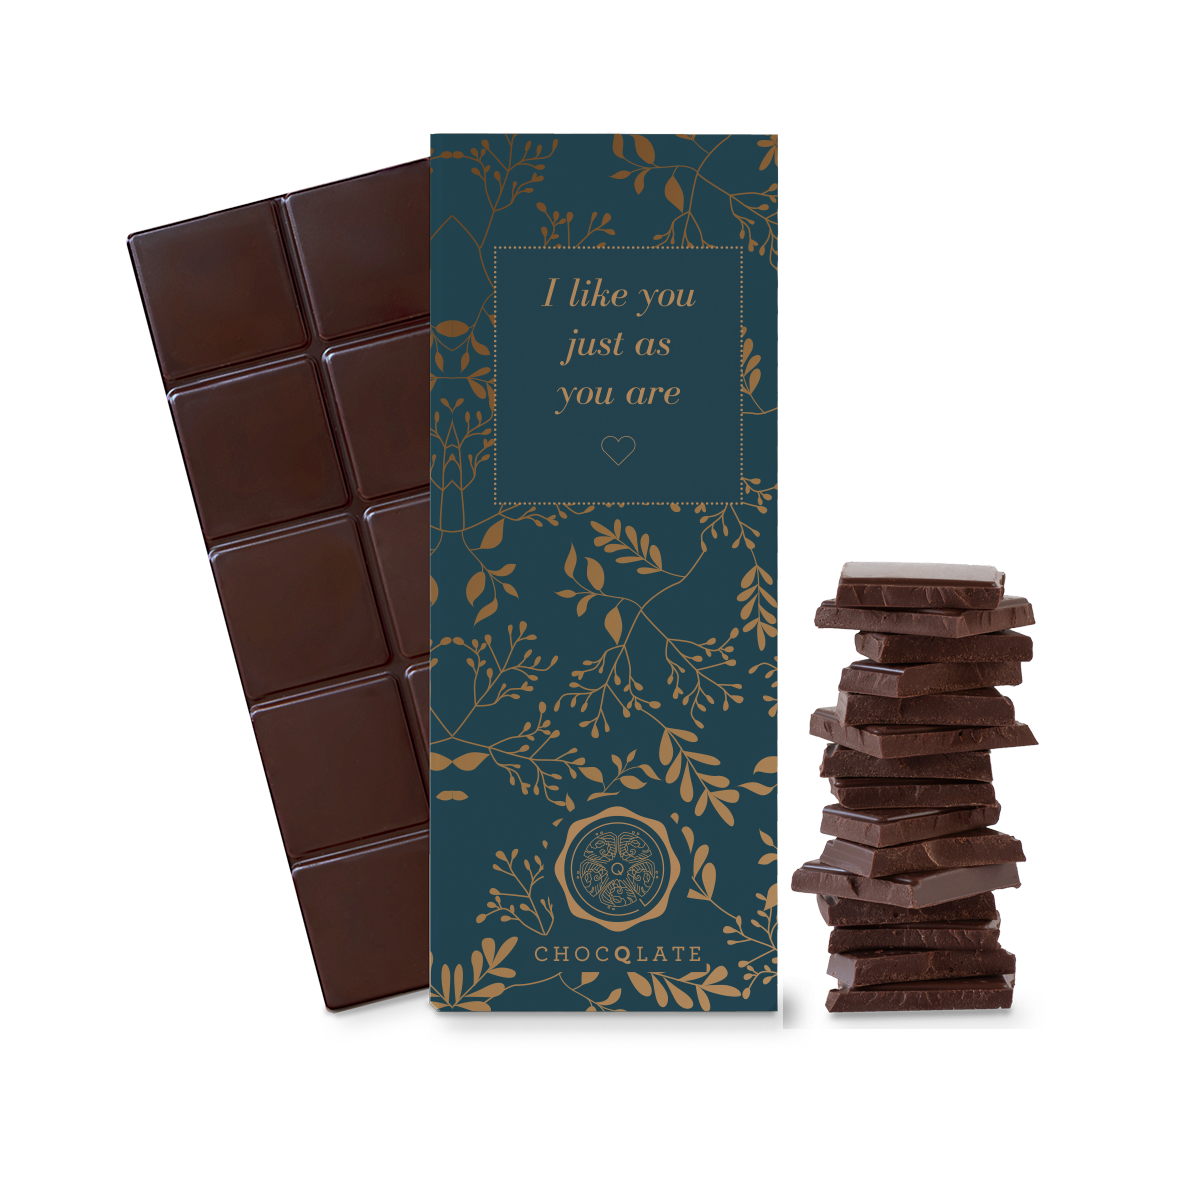 "Me gustas tal como eres" CHOCQLATE chocolate orgánico 50% cacao